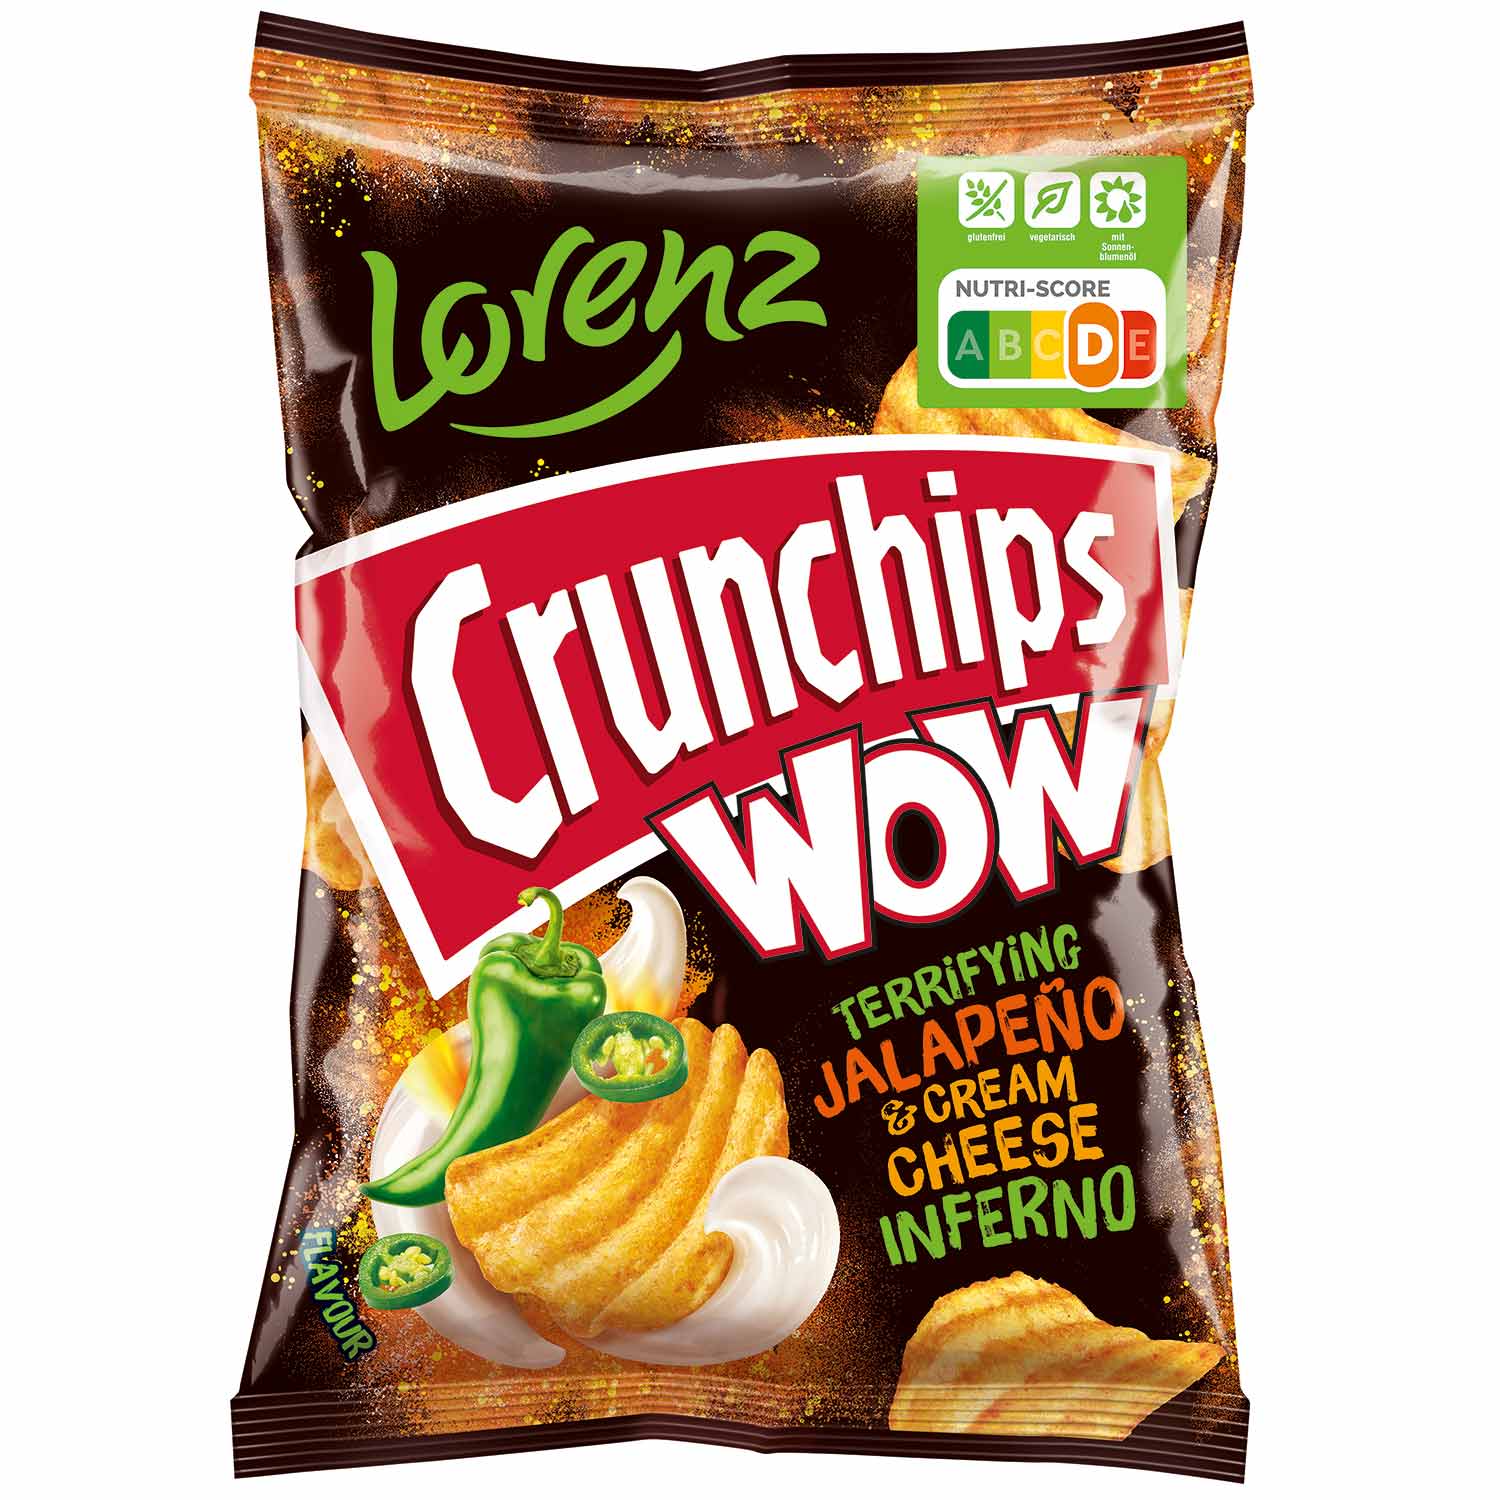 Crunchips WOW Terrifying Jalapeño & Cream Cheese Inferno 110g - Candyshop.ch